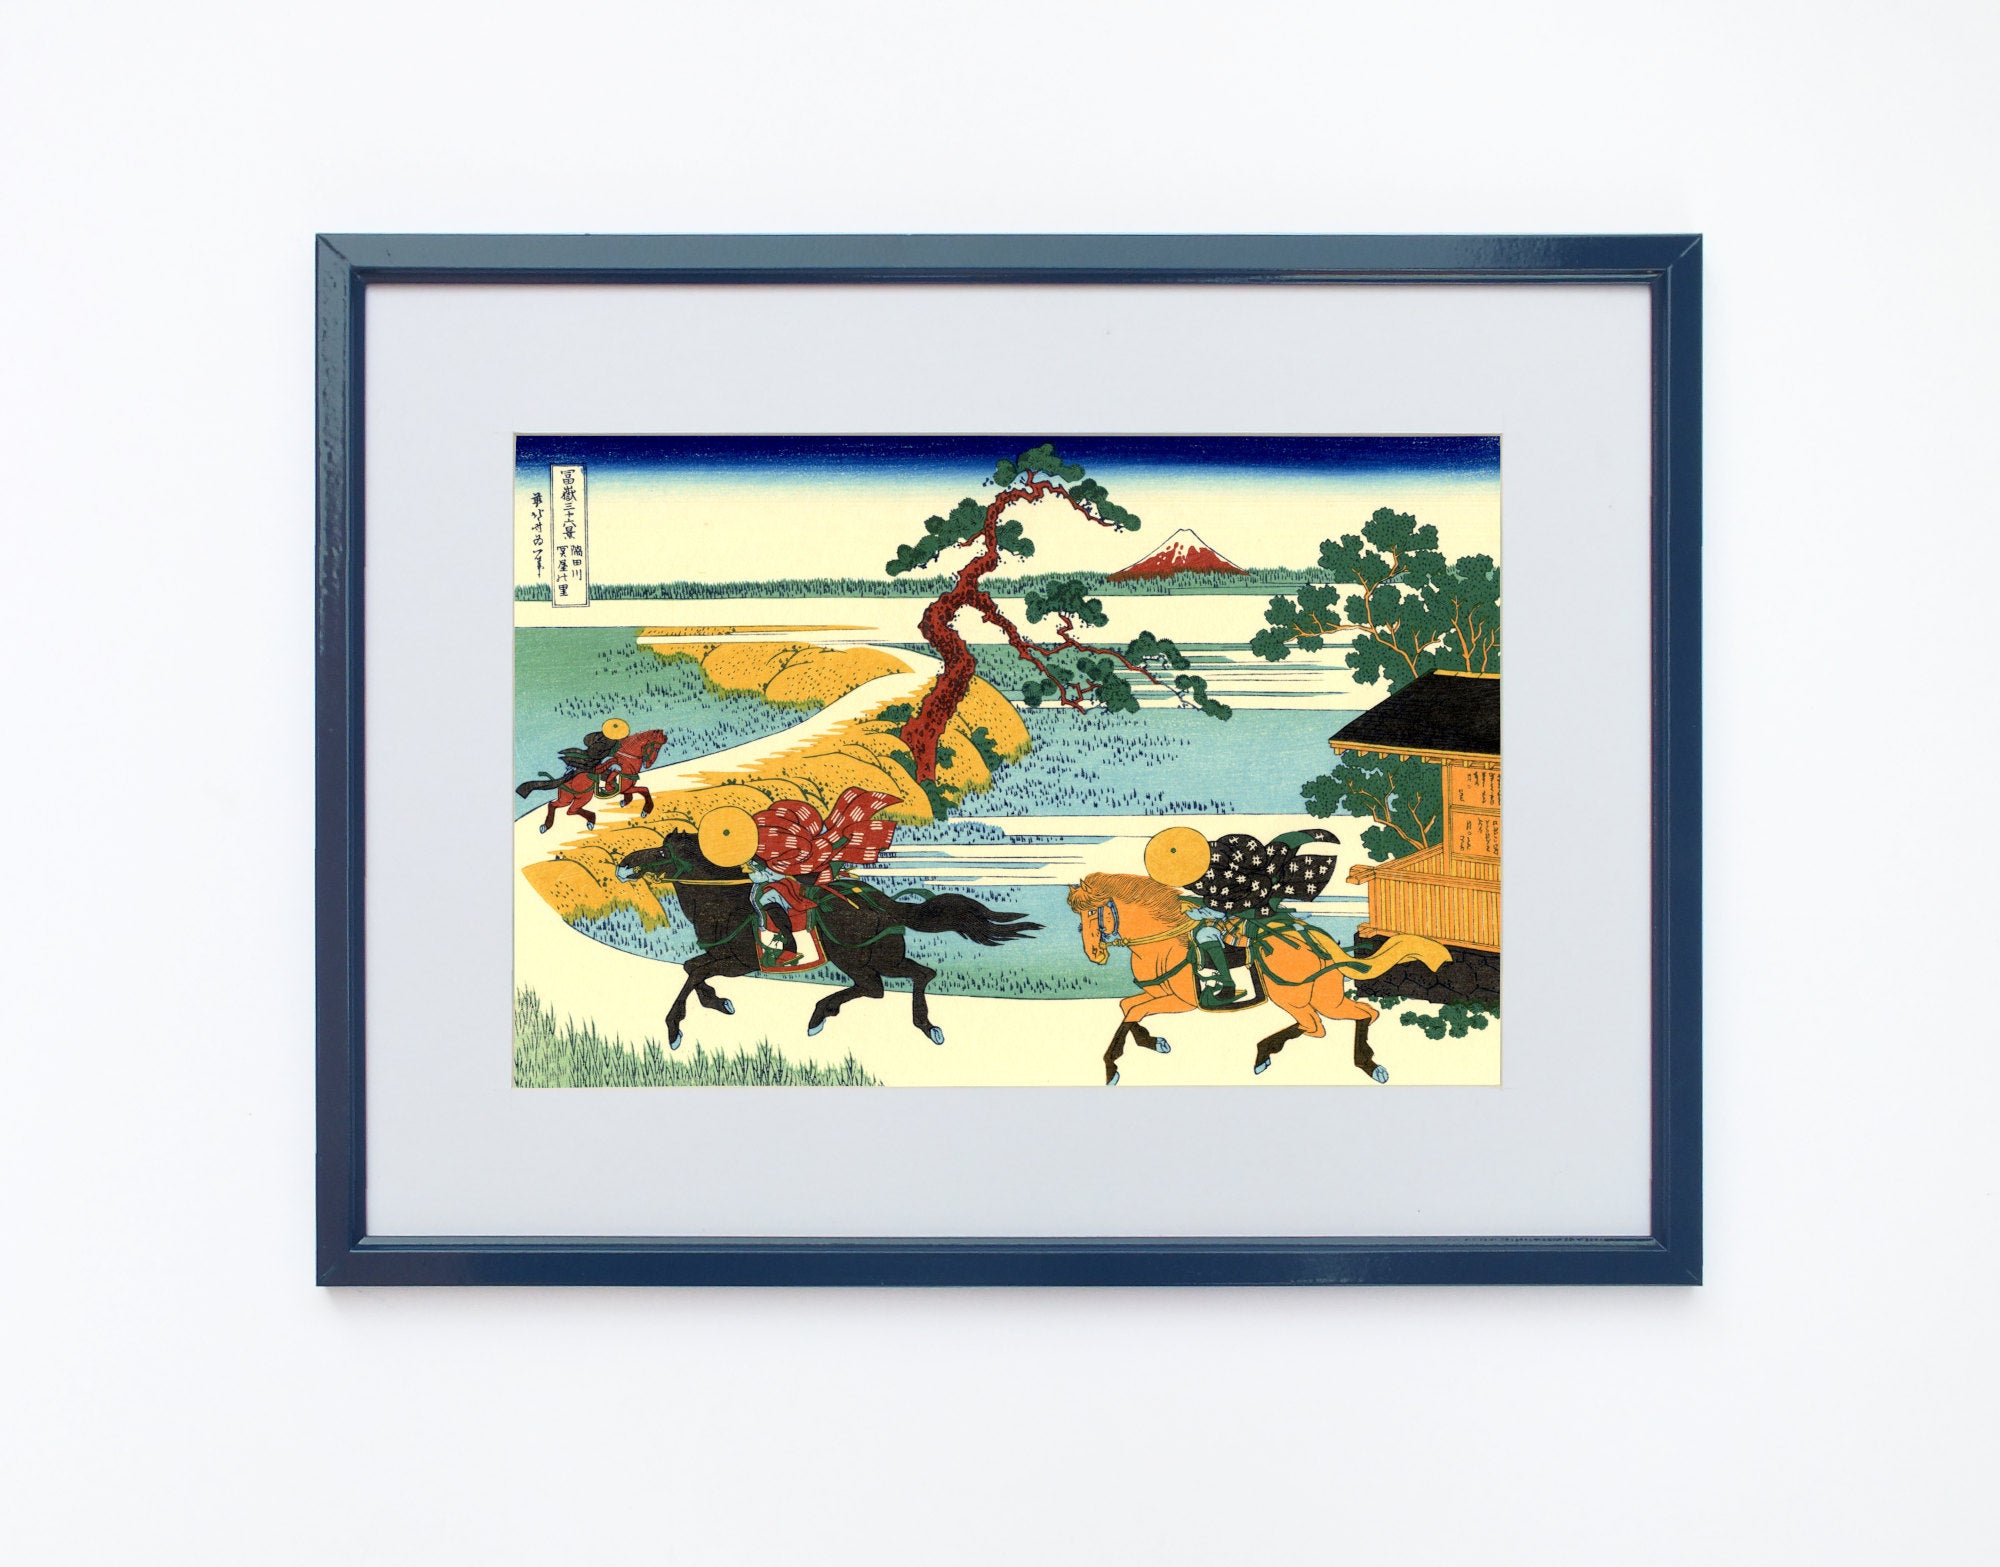 36 Views of Mount Fuji, Barrier Town on the Sumida River, Katsushika Hokusai, Japanese Print